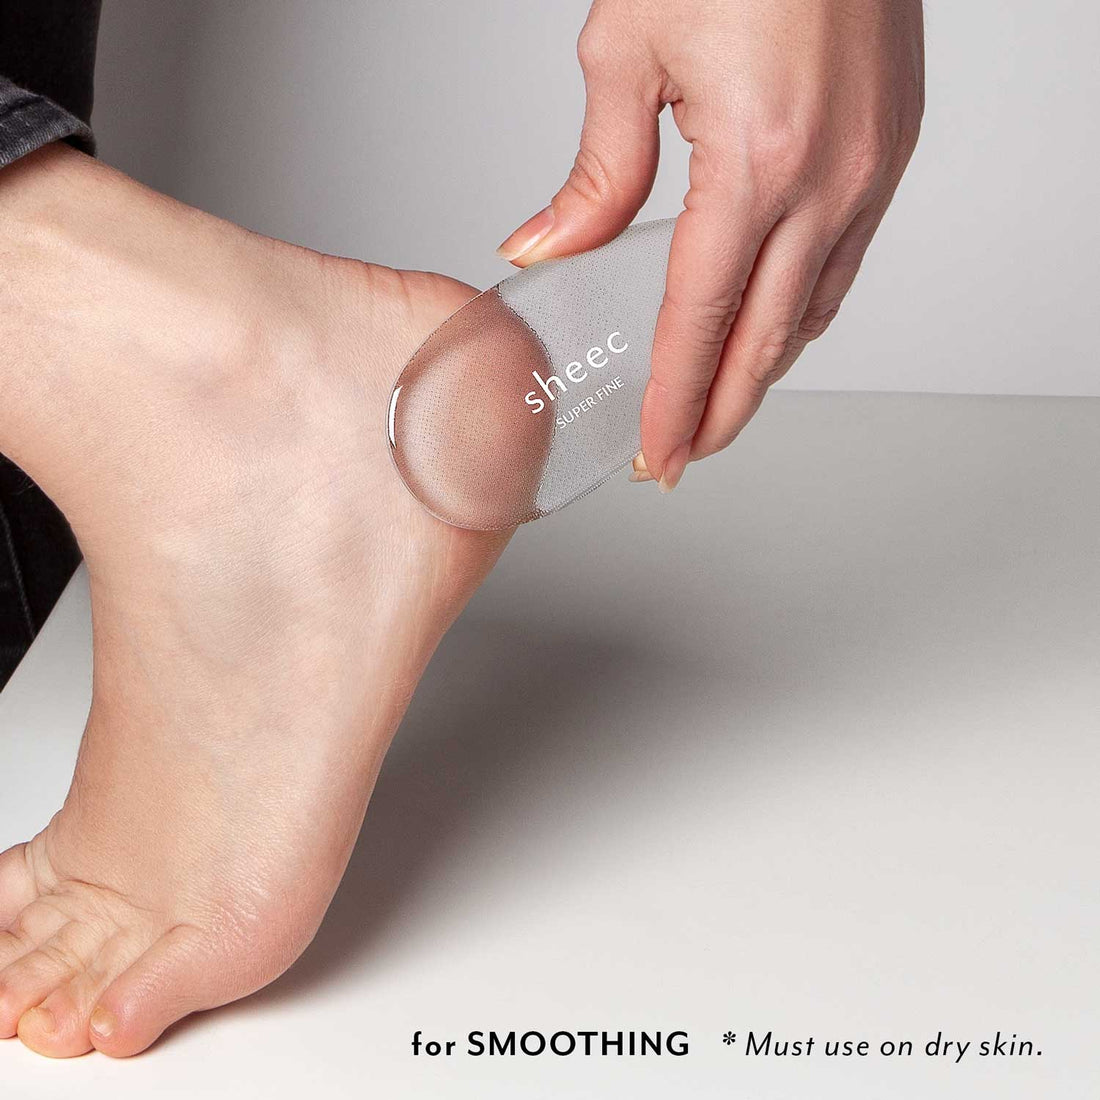 Foot Scrubber For Dead Skin, Packaging Size: 1 Kg